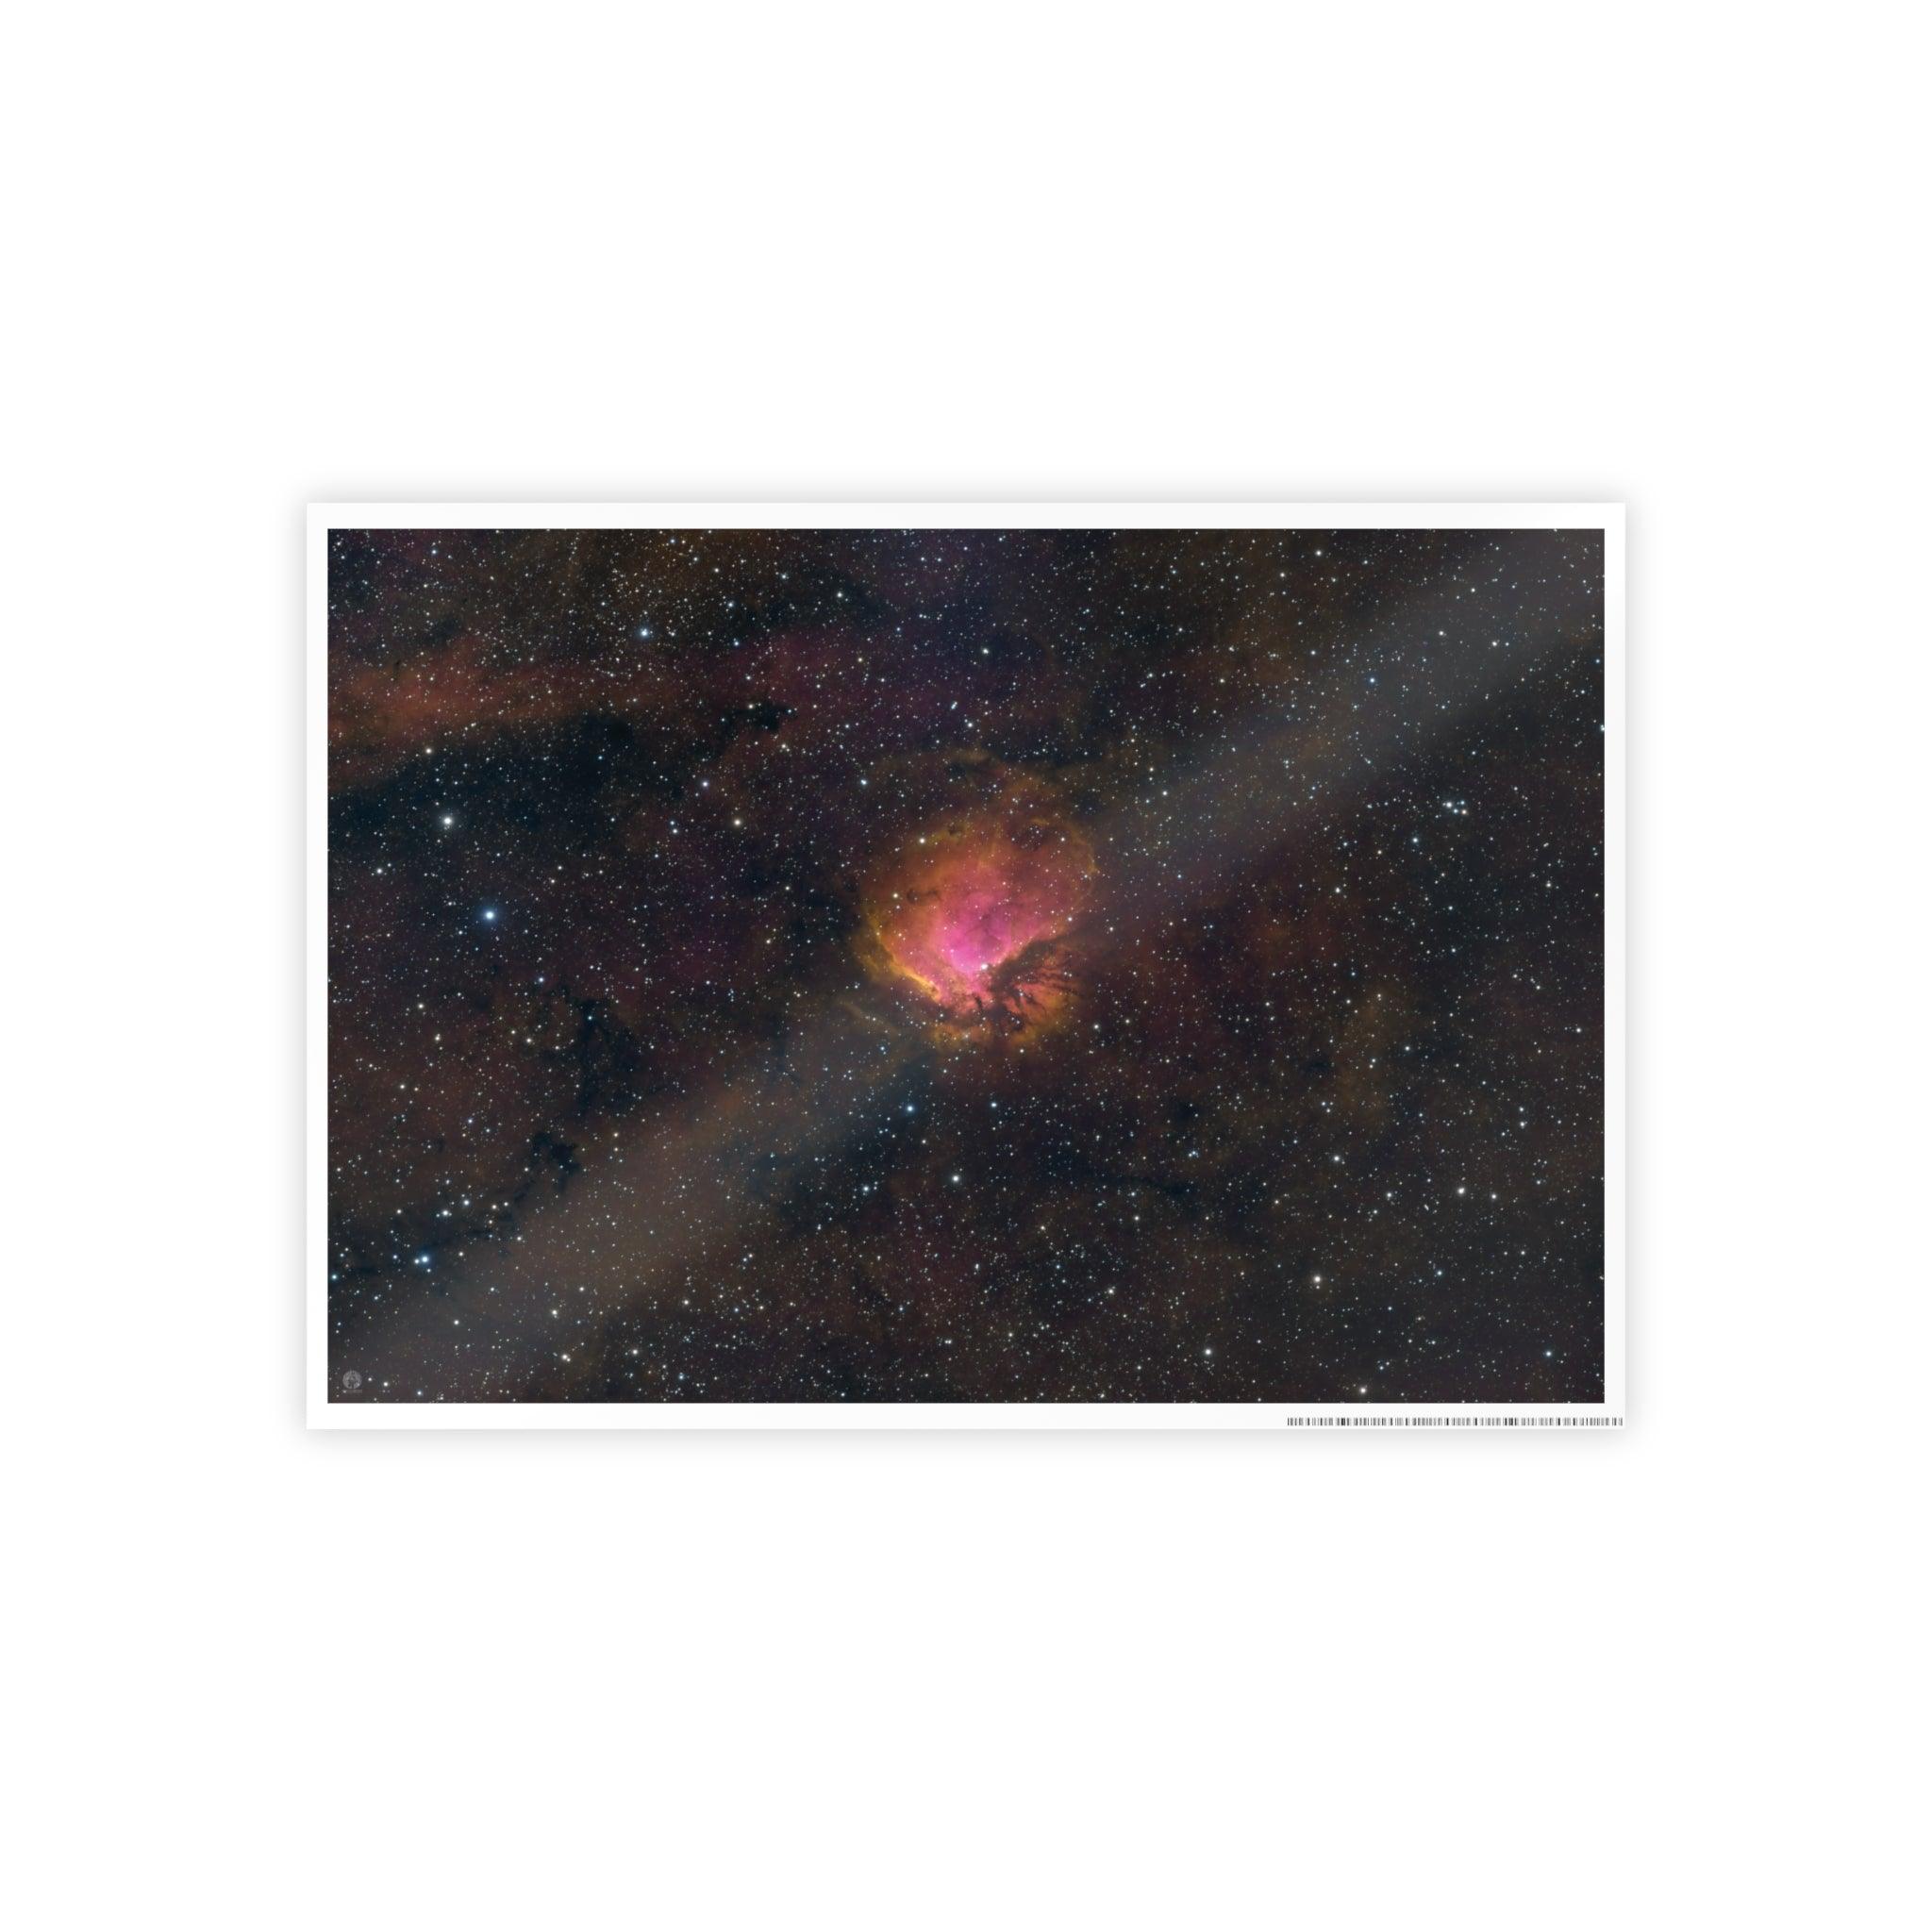 Poster of the Nebula SH2-112